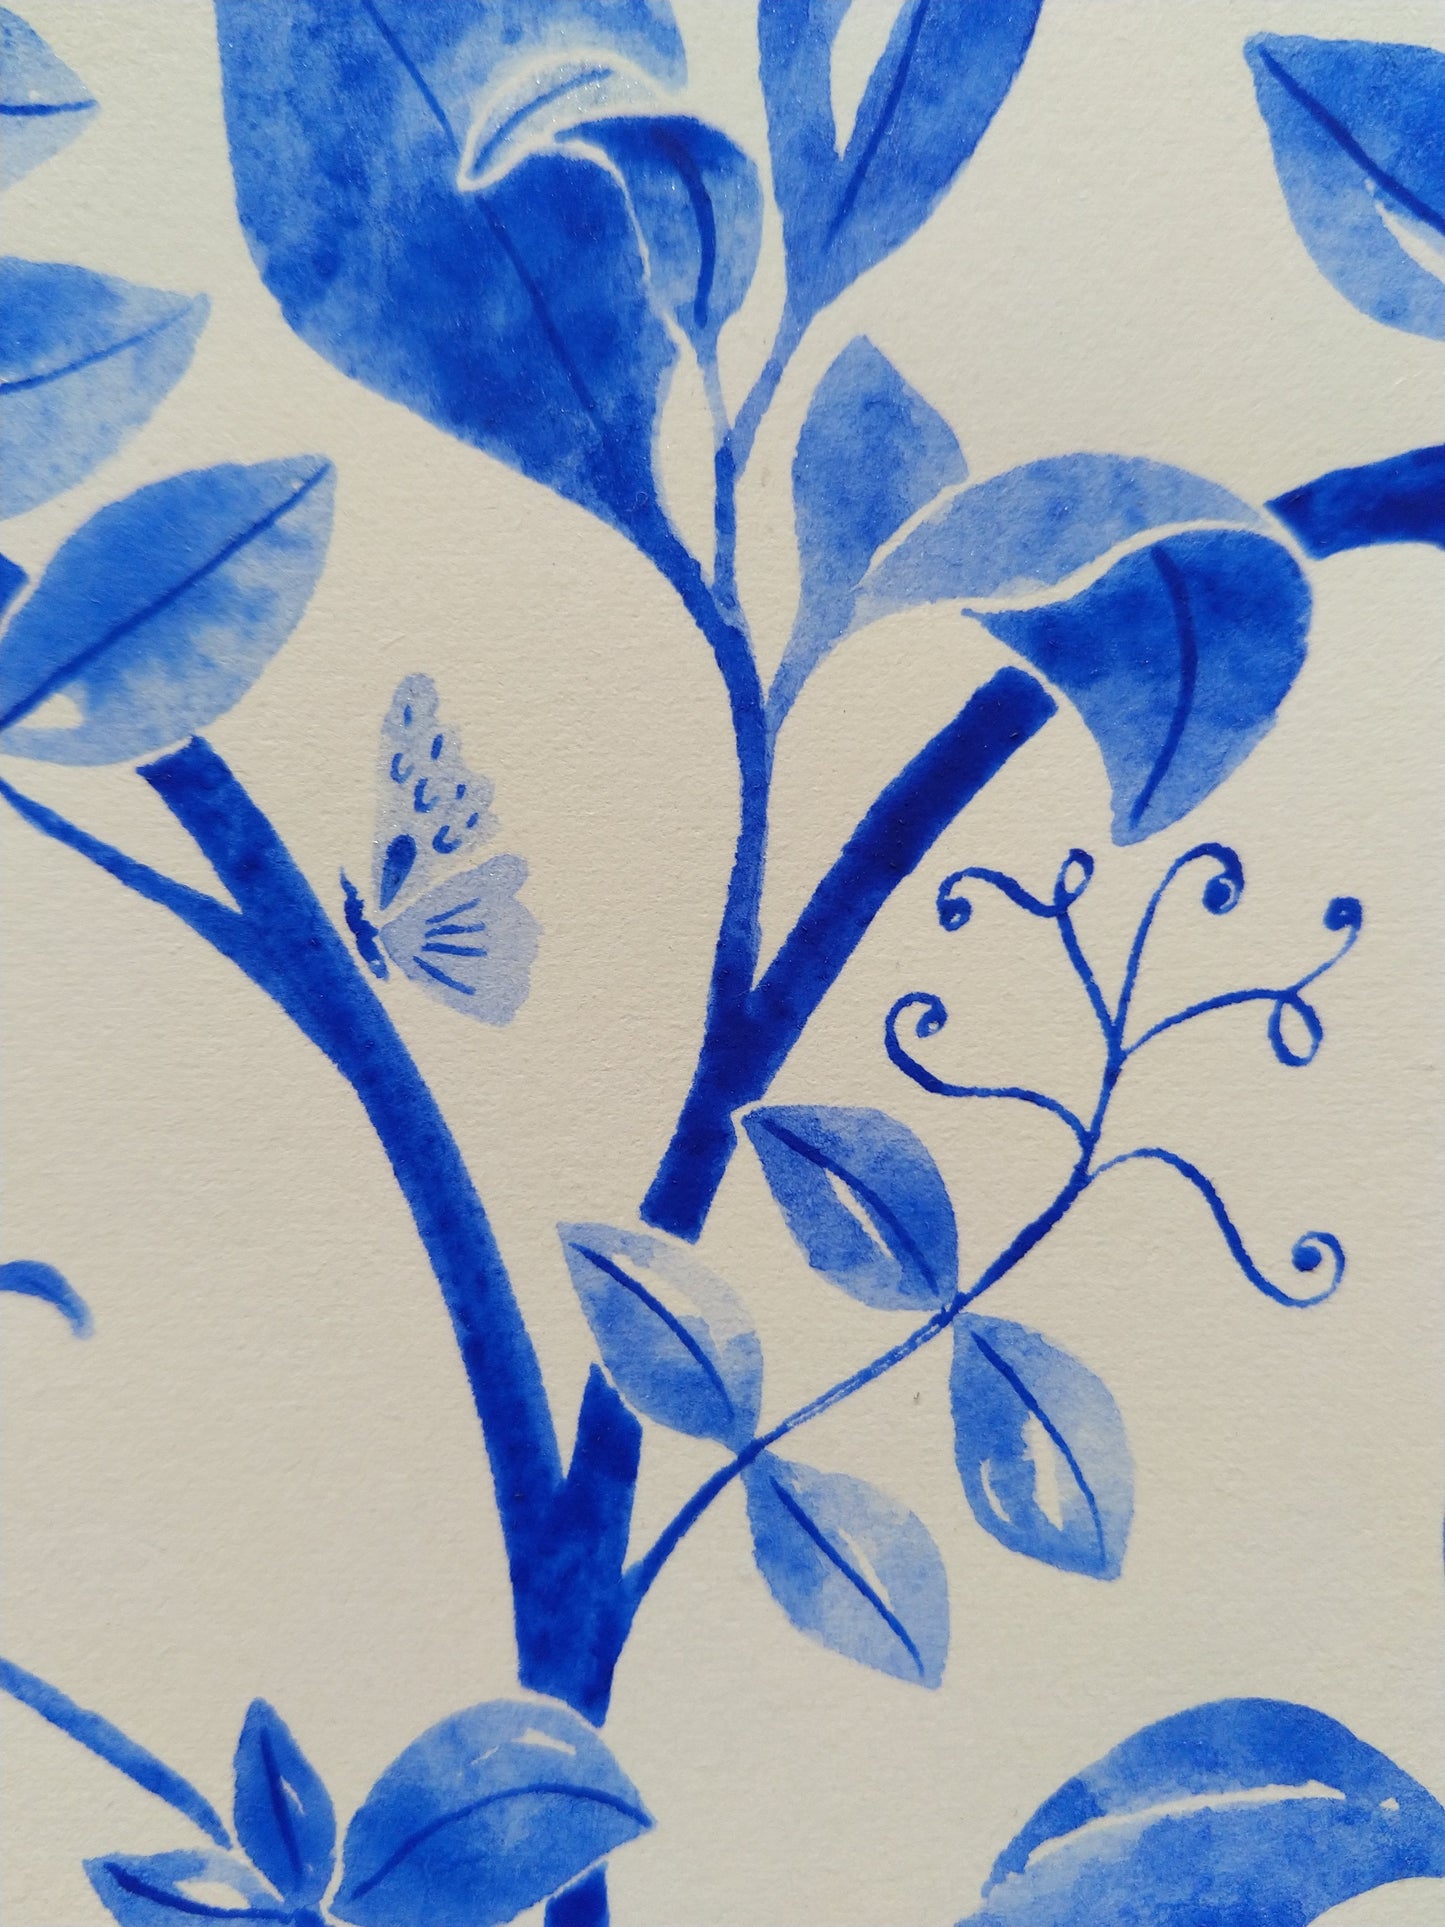 Watercolour Print - Generosity. A study in Cobalt Blue.